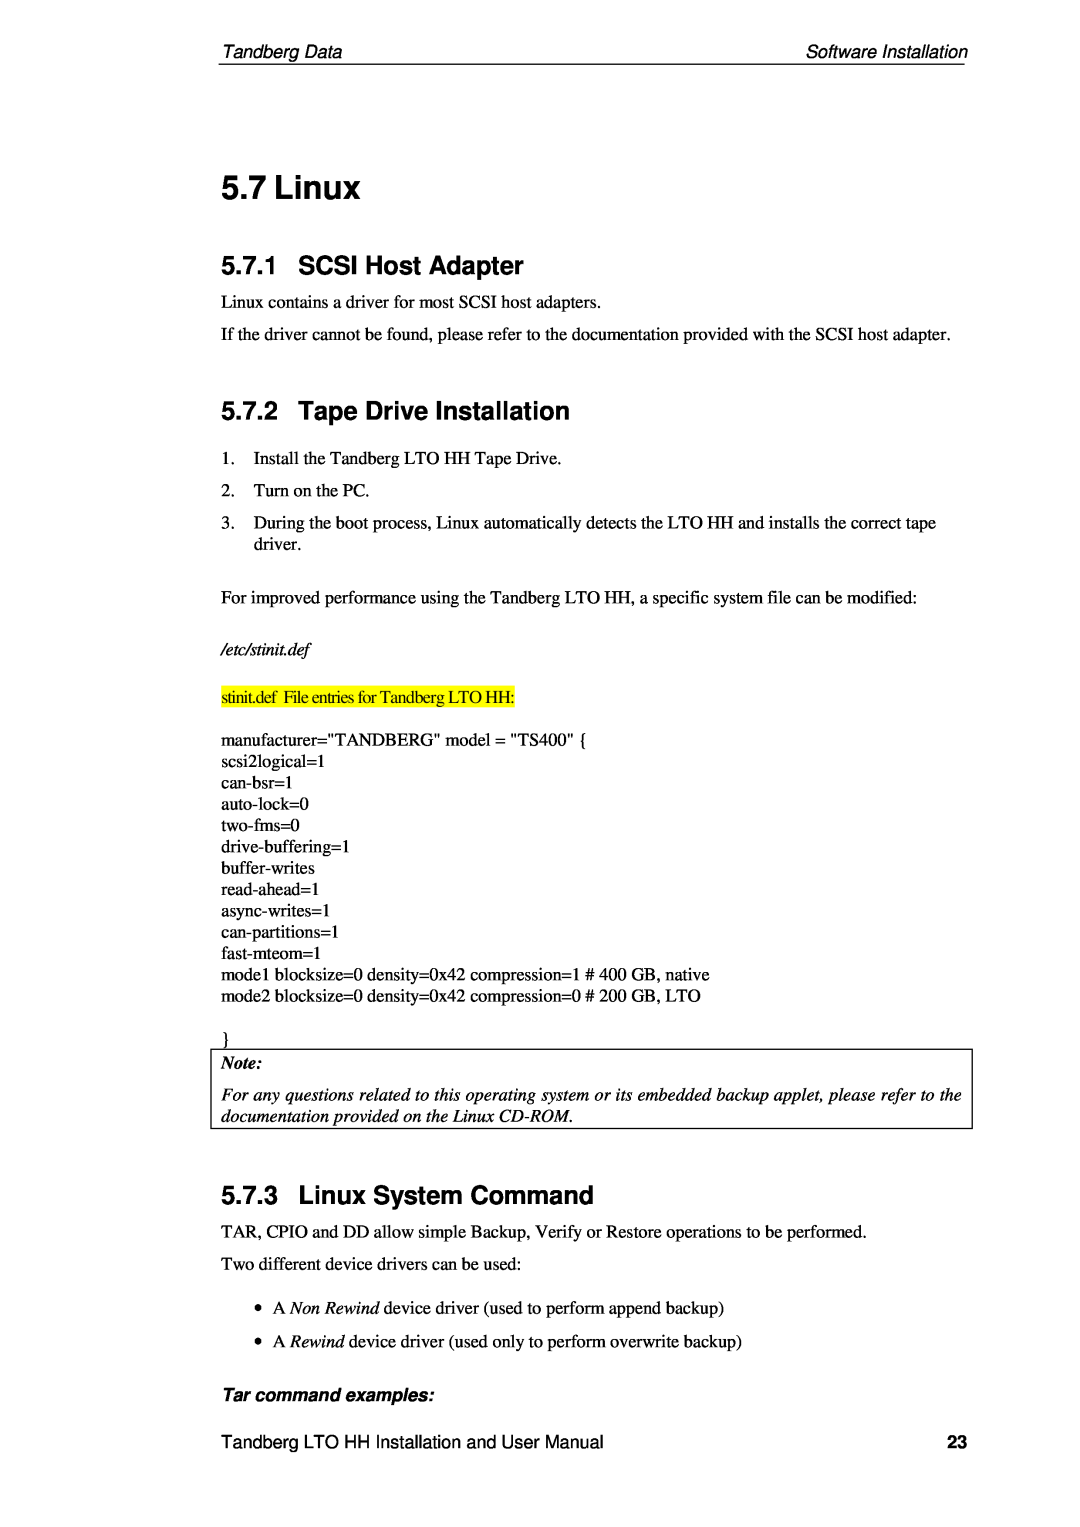 Tandberg Data LTO-3 HH SCSI Host Adapter, Tape Drive Installation, Linux System Command, etc/stinit.def, Tandberg Data 